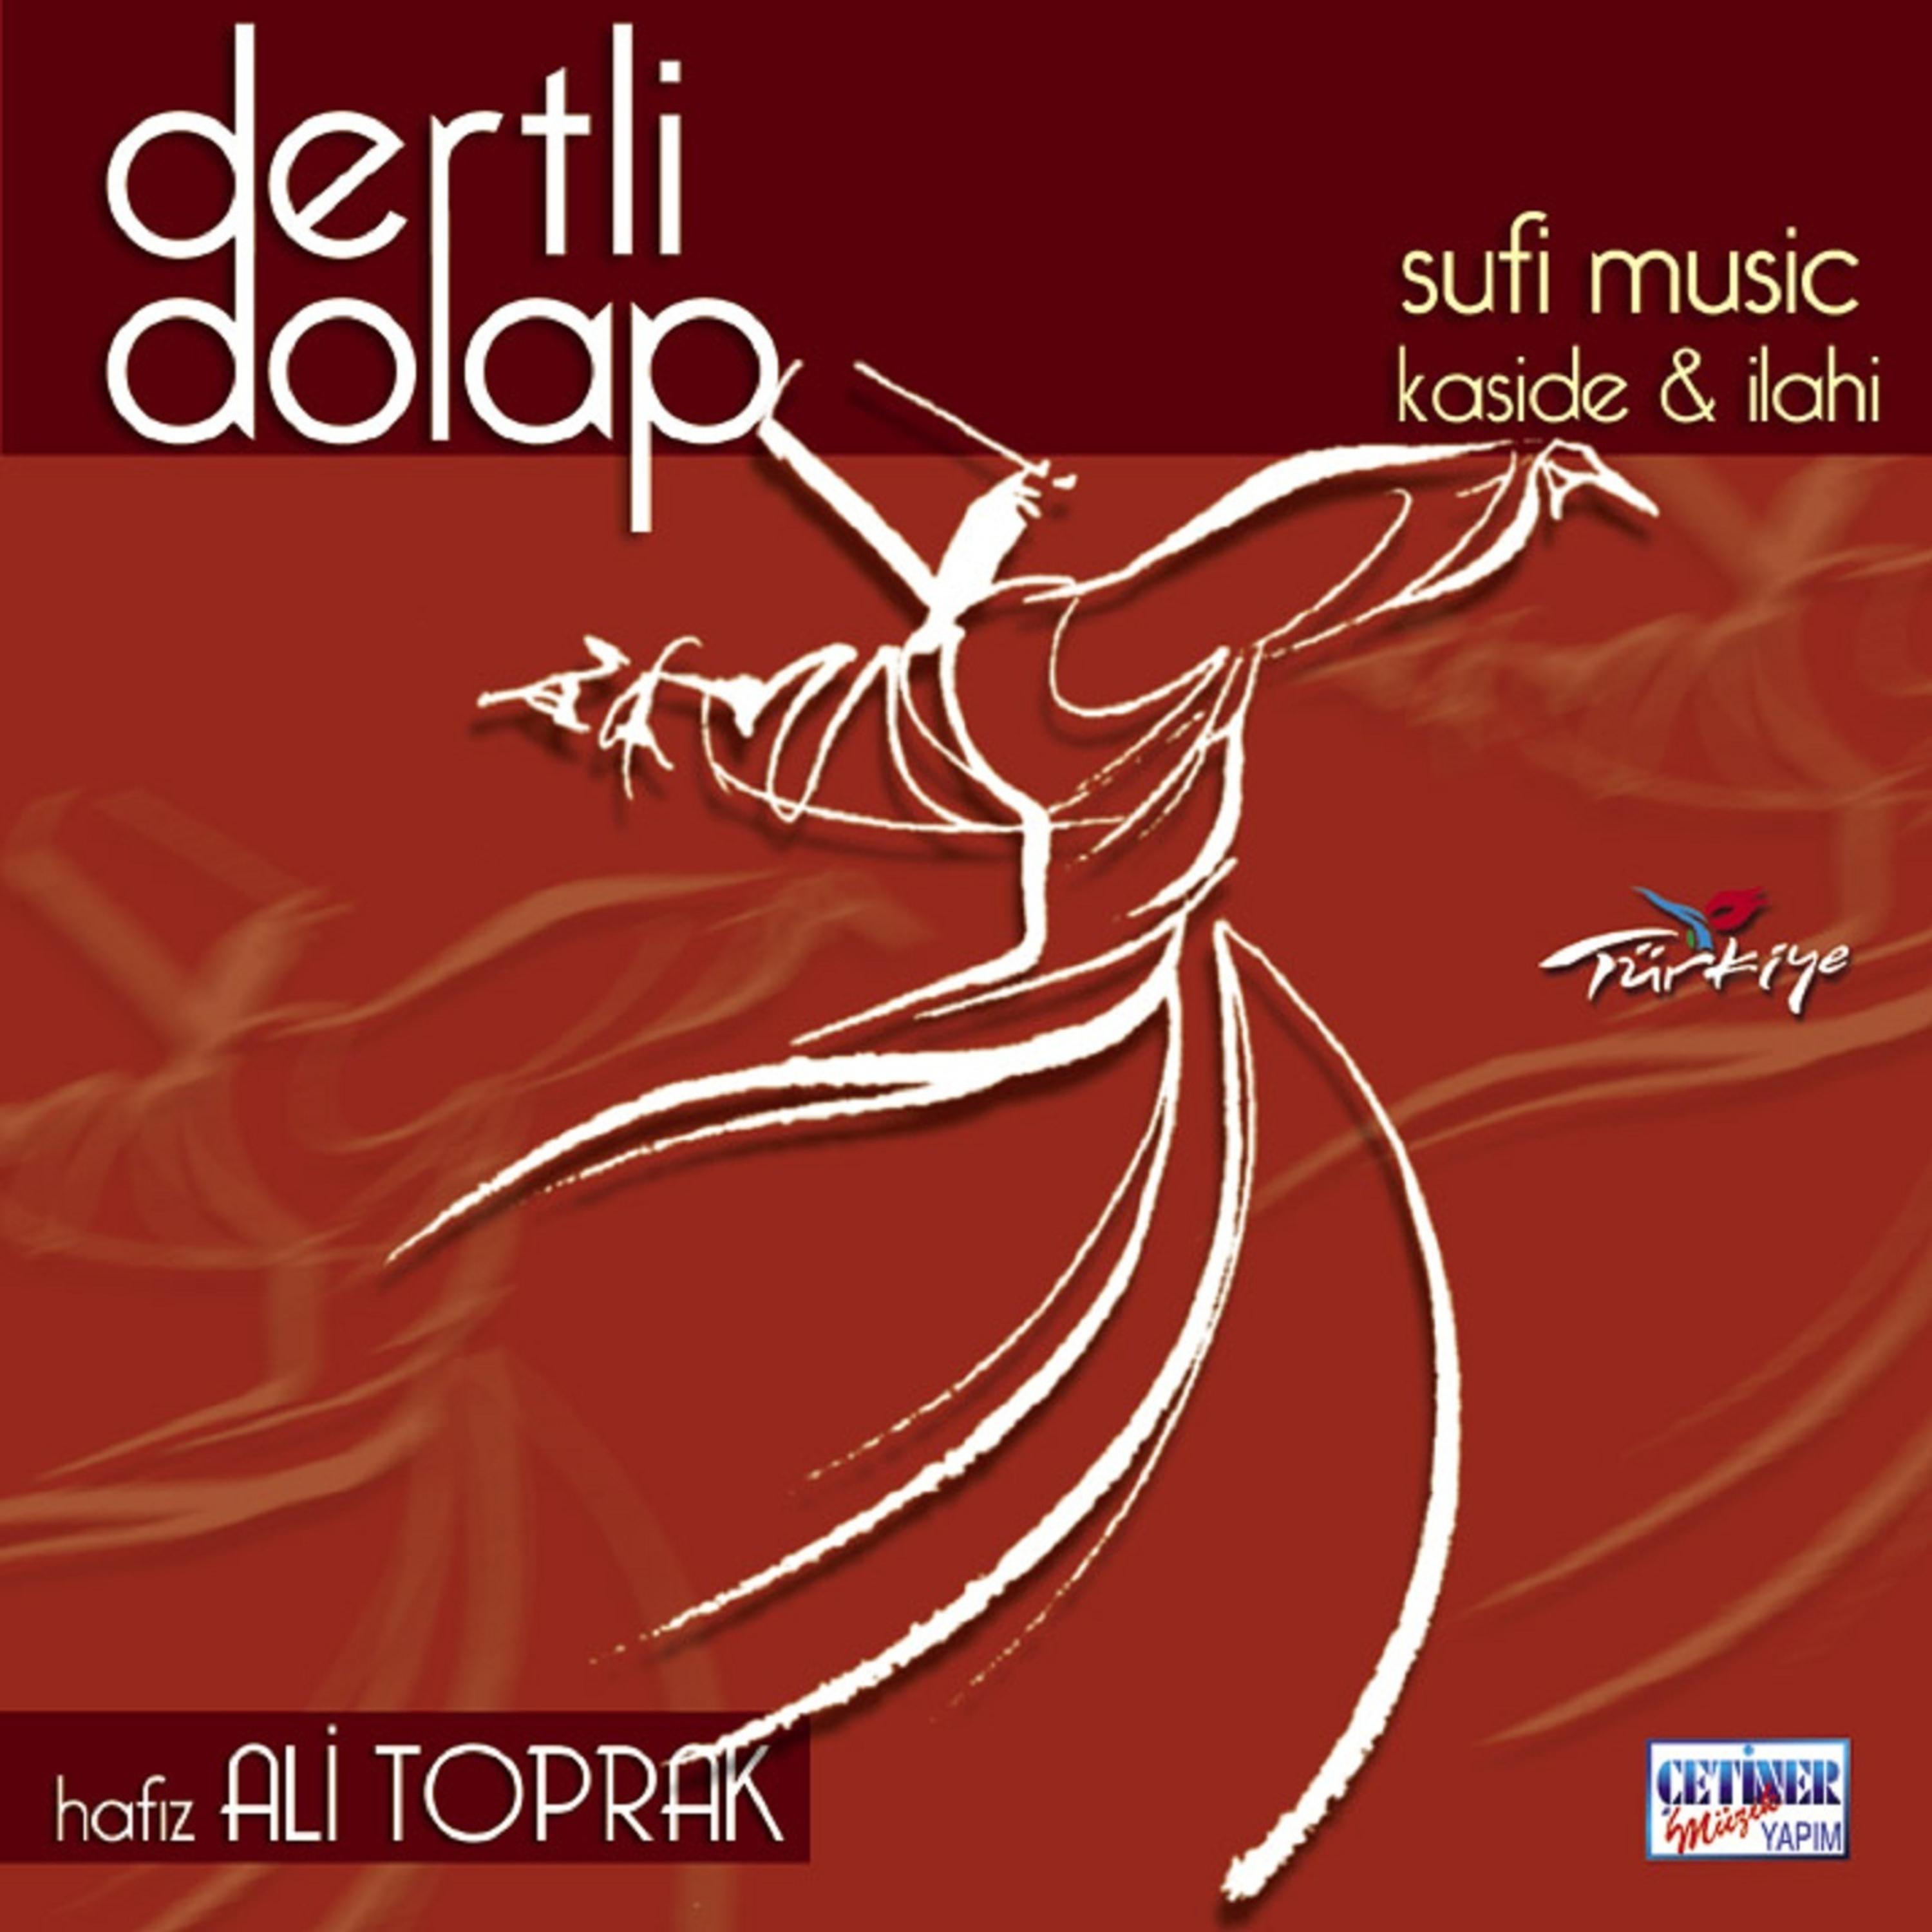 Постер альбома Dertli Dolap (Sufi Music)